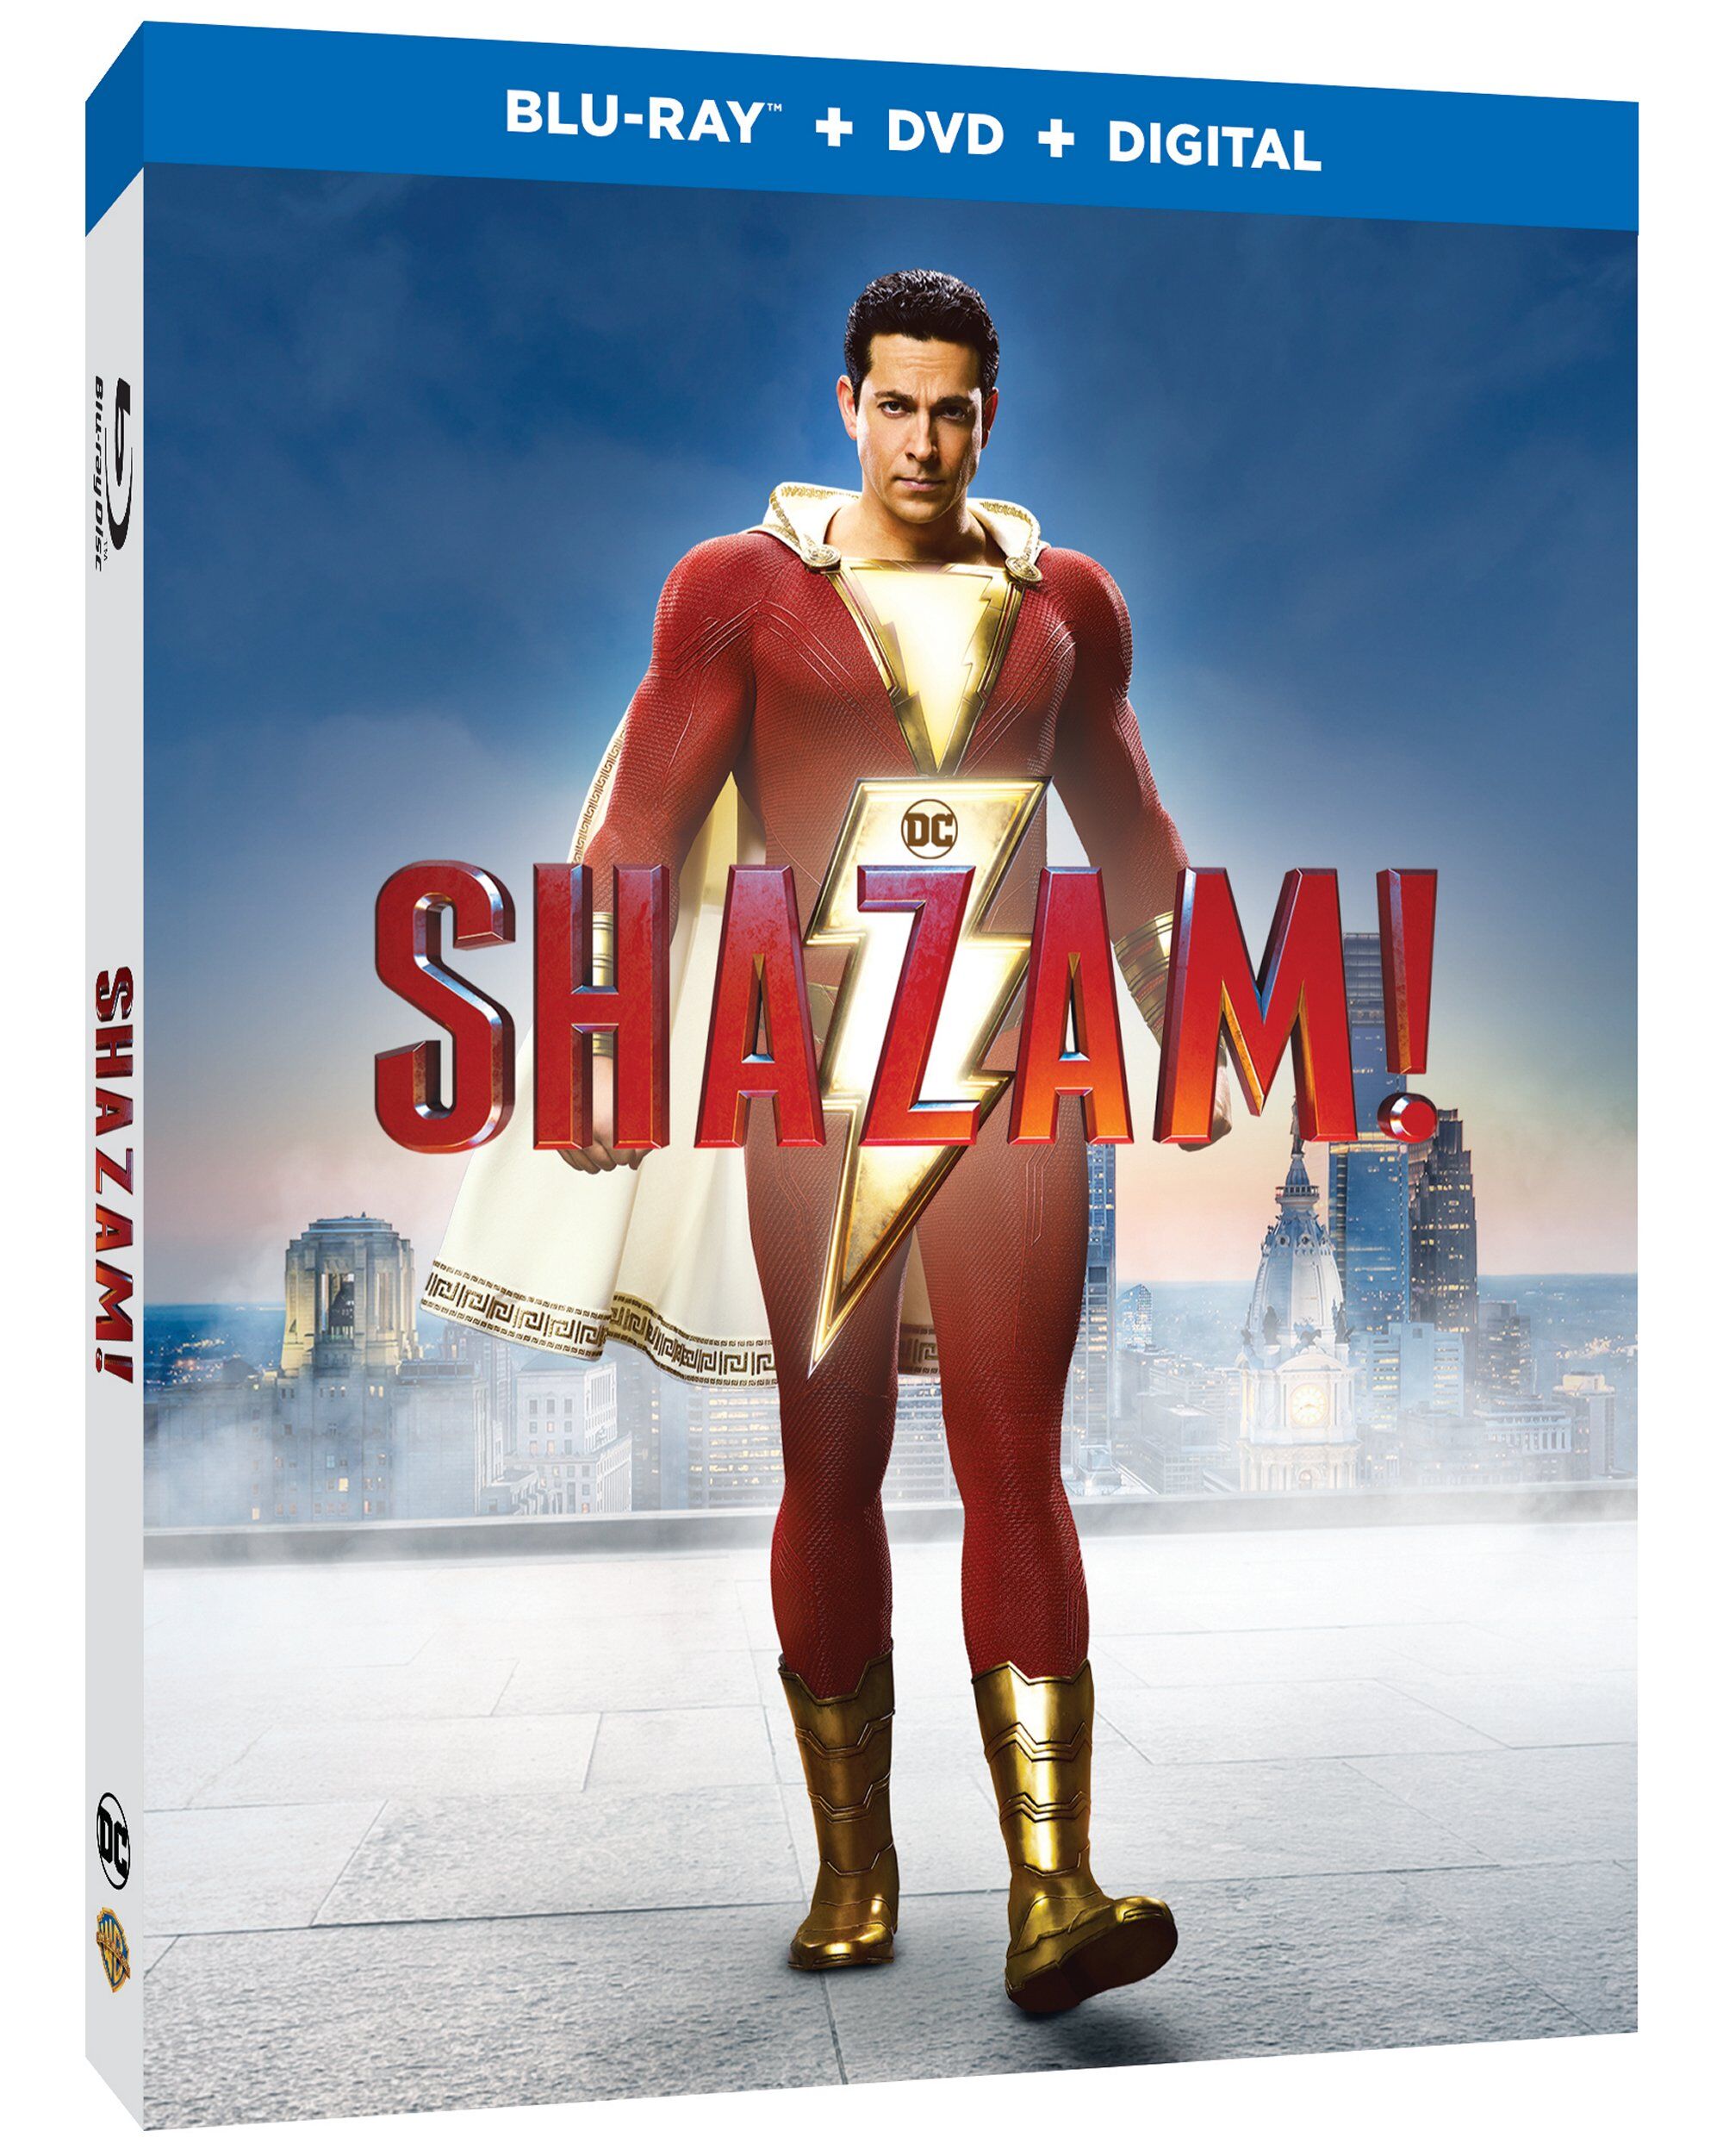 Shazam! Bluray Review